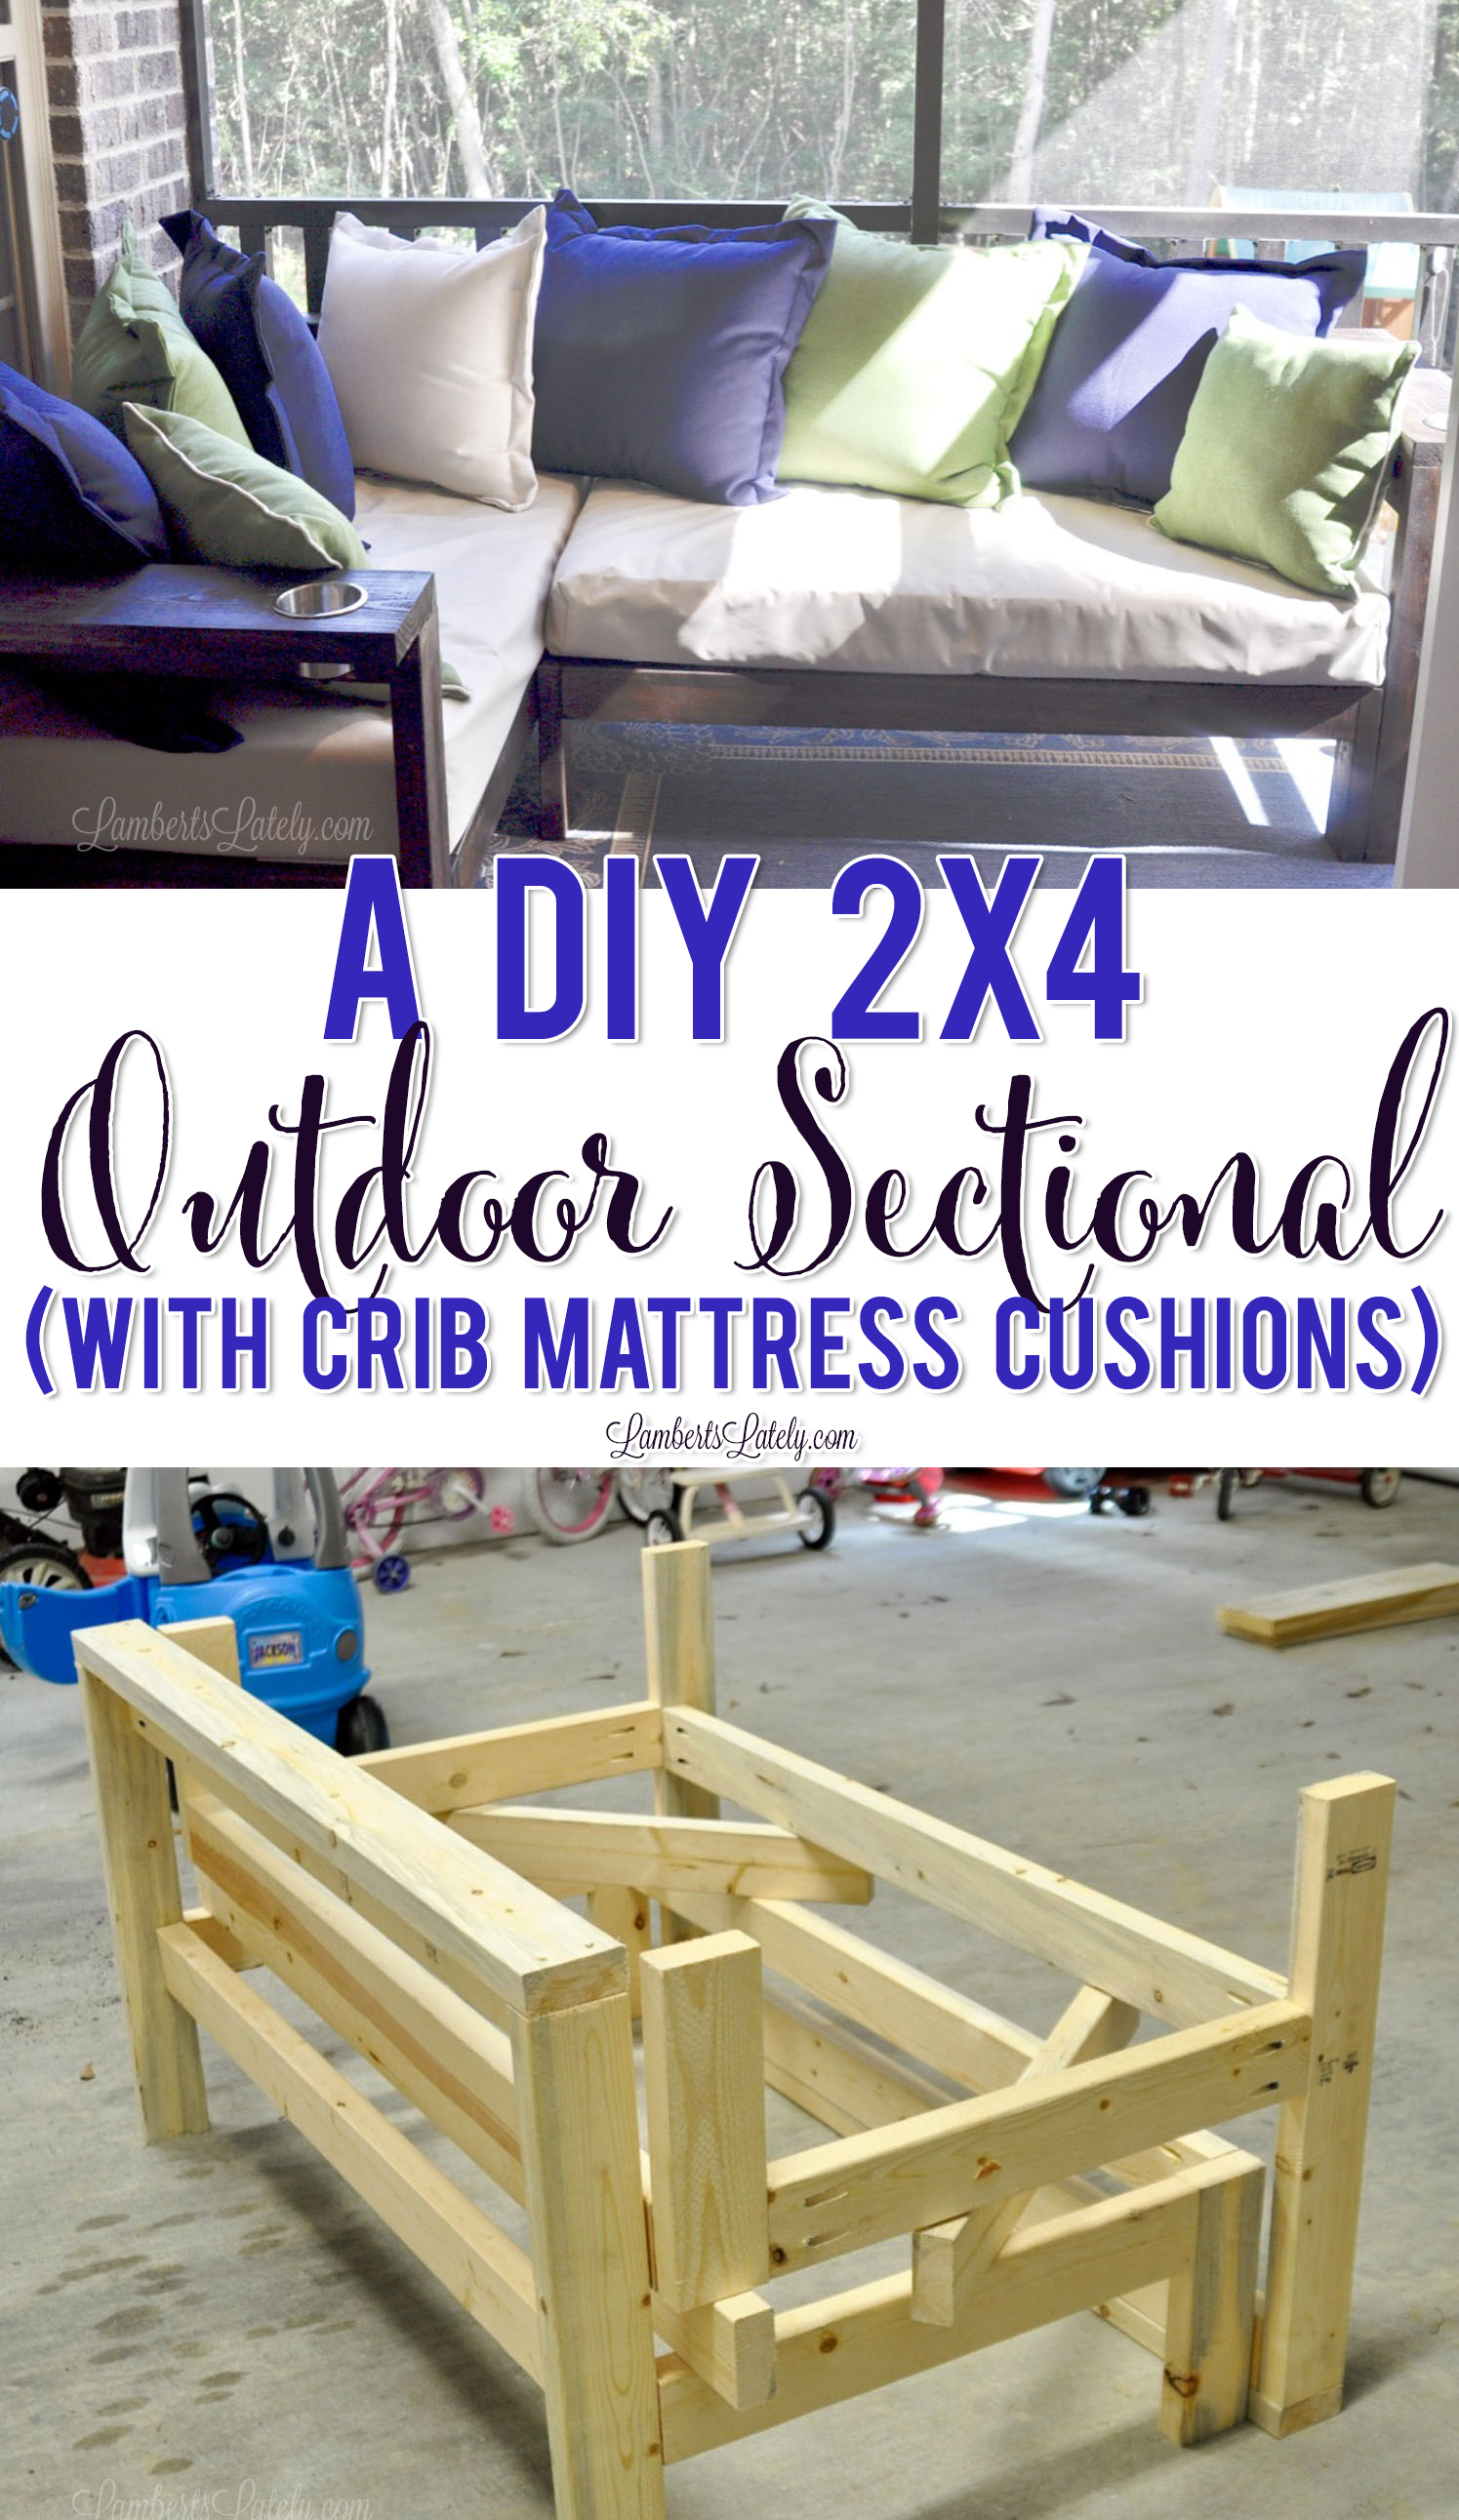 A DIY 2x4 Outdoor Sectional (with Crib Mattress Cushions) - A DIY 2x4 Outdoor Sectional (with Crib Mattress Cushions) -   16 diy Outdoor porch ideas